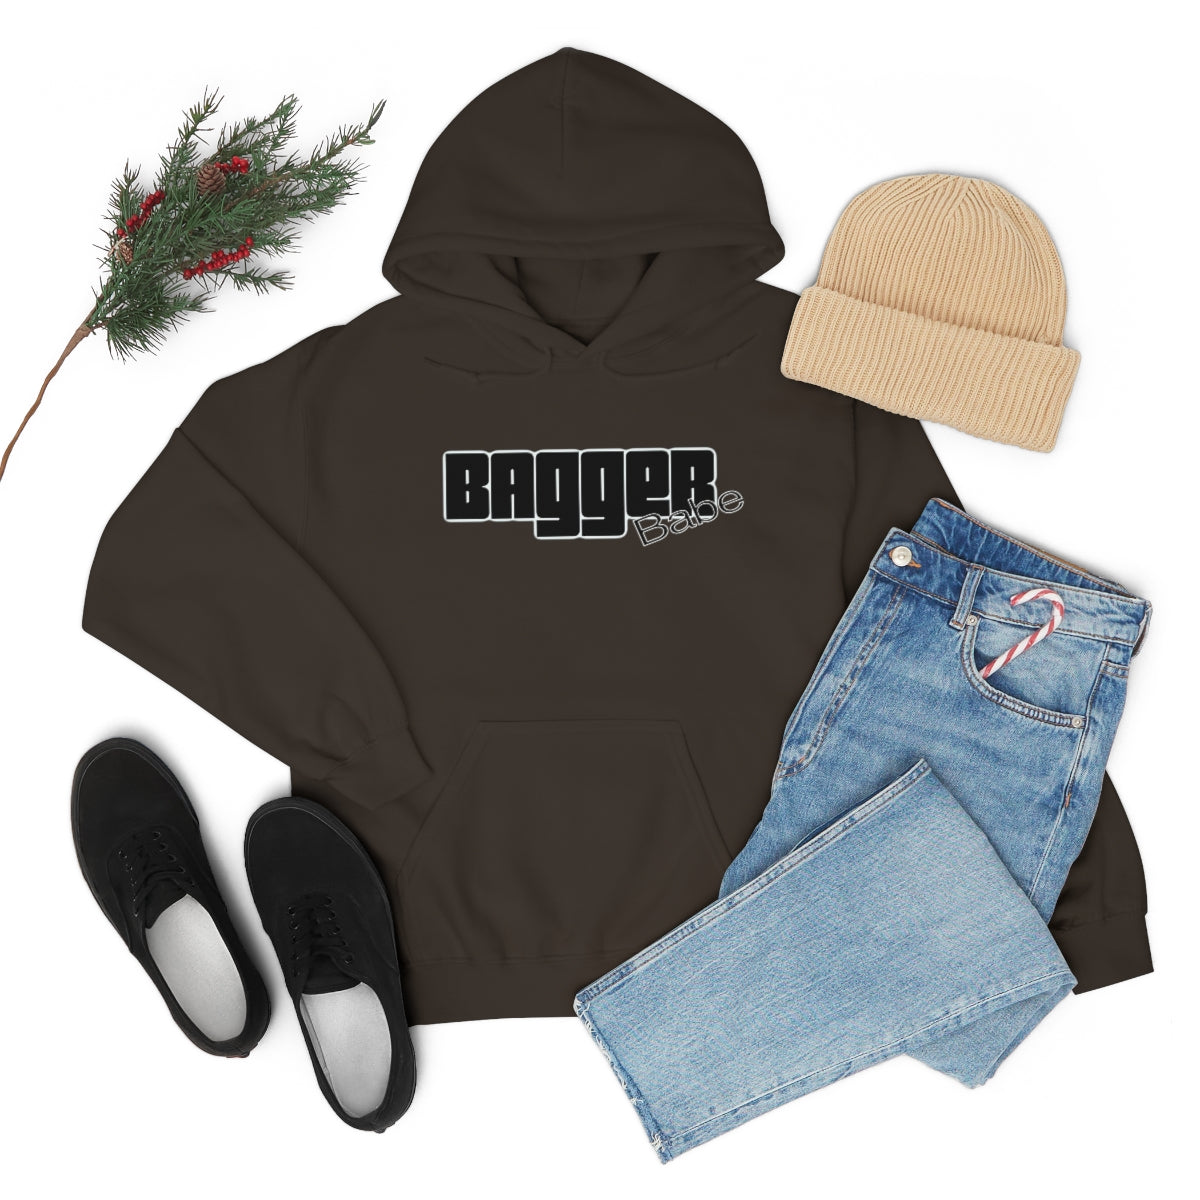 Bagger Babe (Black Letters) Unisex Heavy Blend™ Hooded Sweatshirt